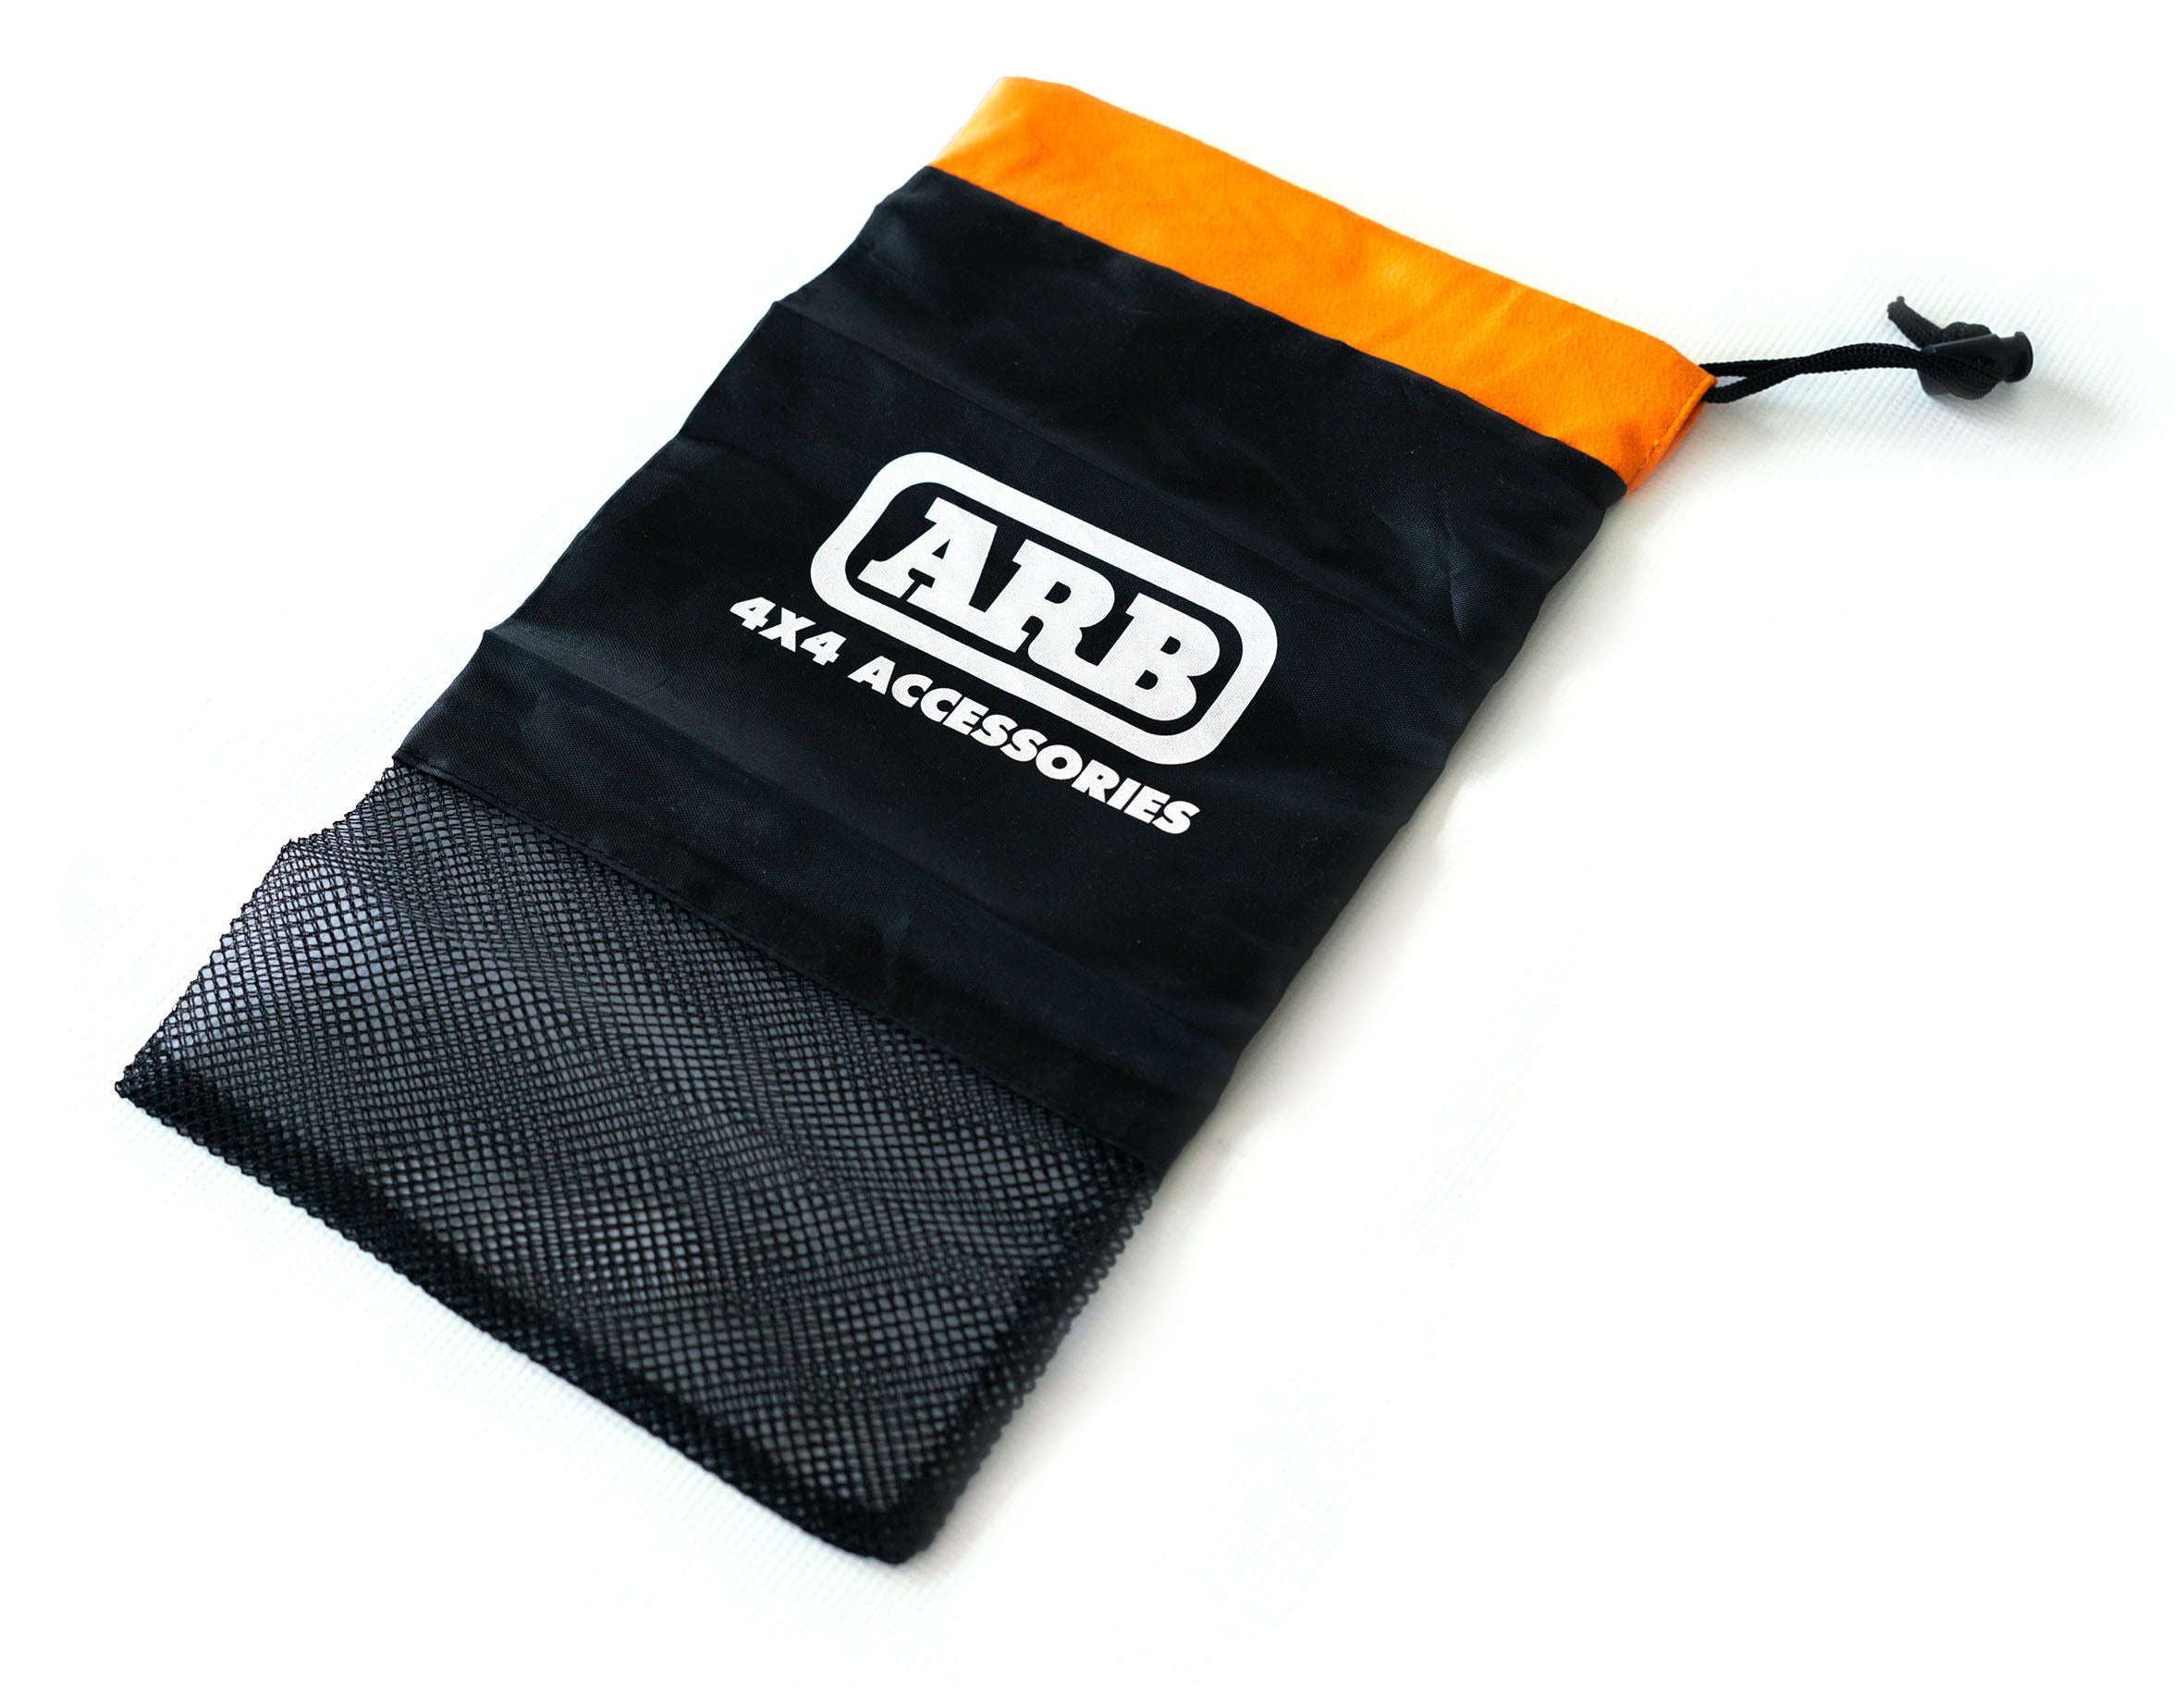 ARB Soft Connect Shackle 14.5T Orange